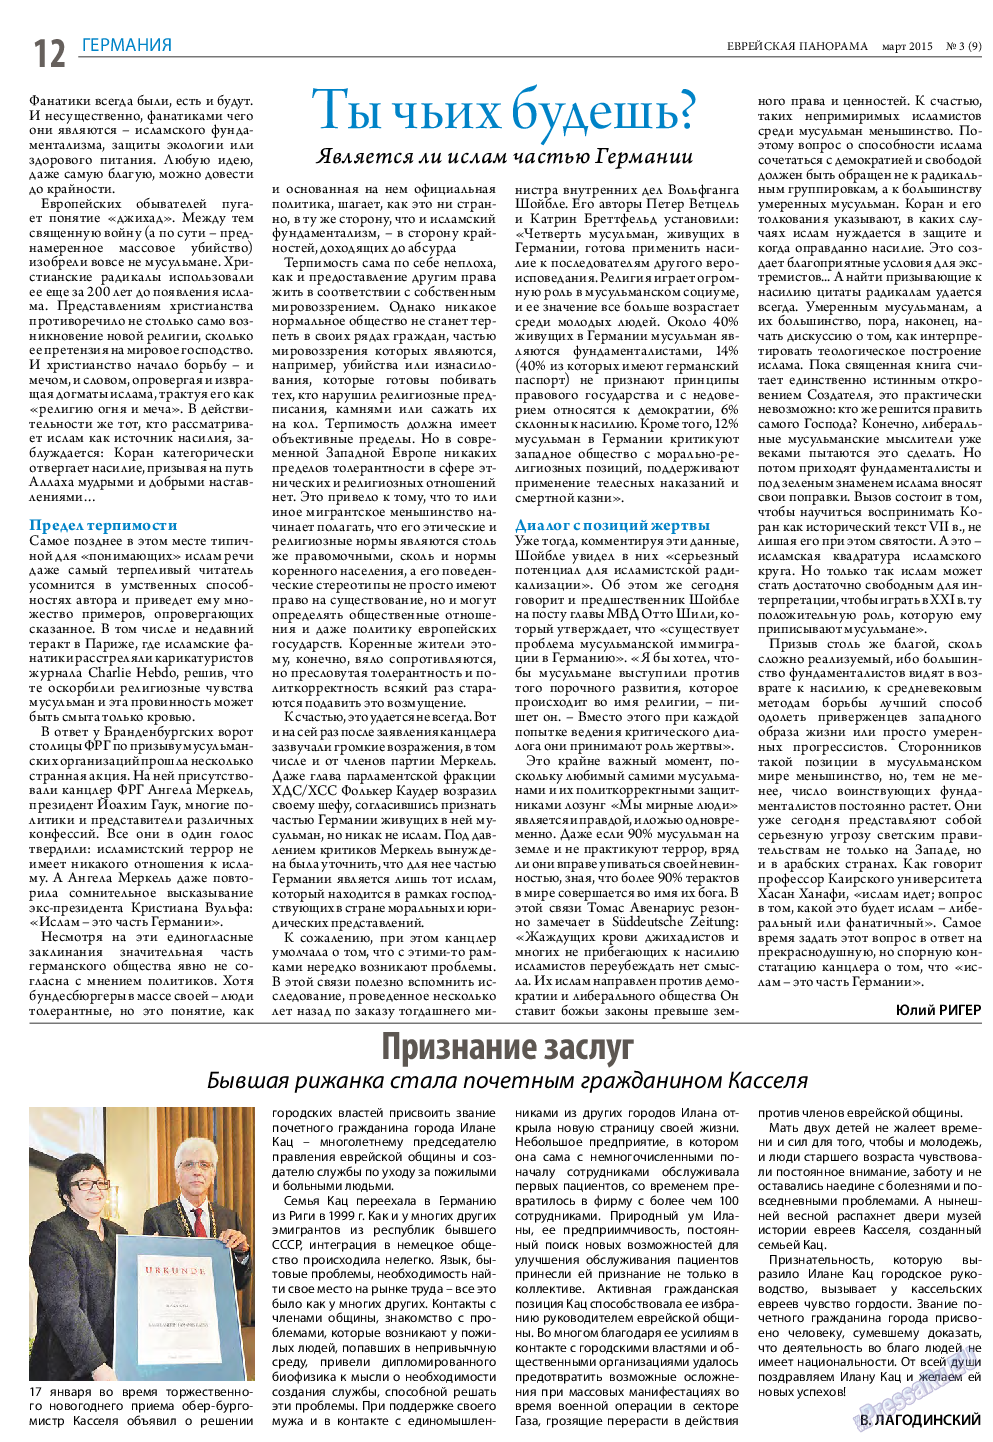 Еврейская панорама, газета. 2015 №3 стр.12